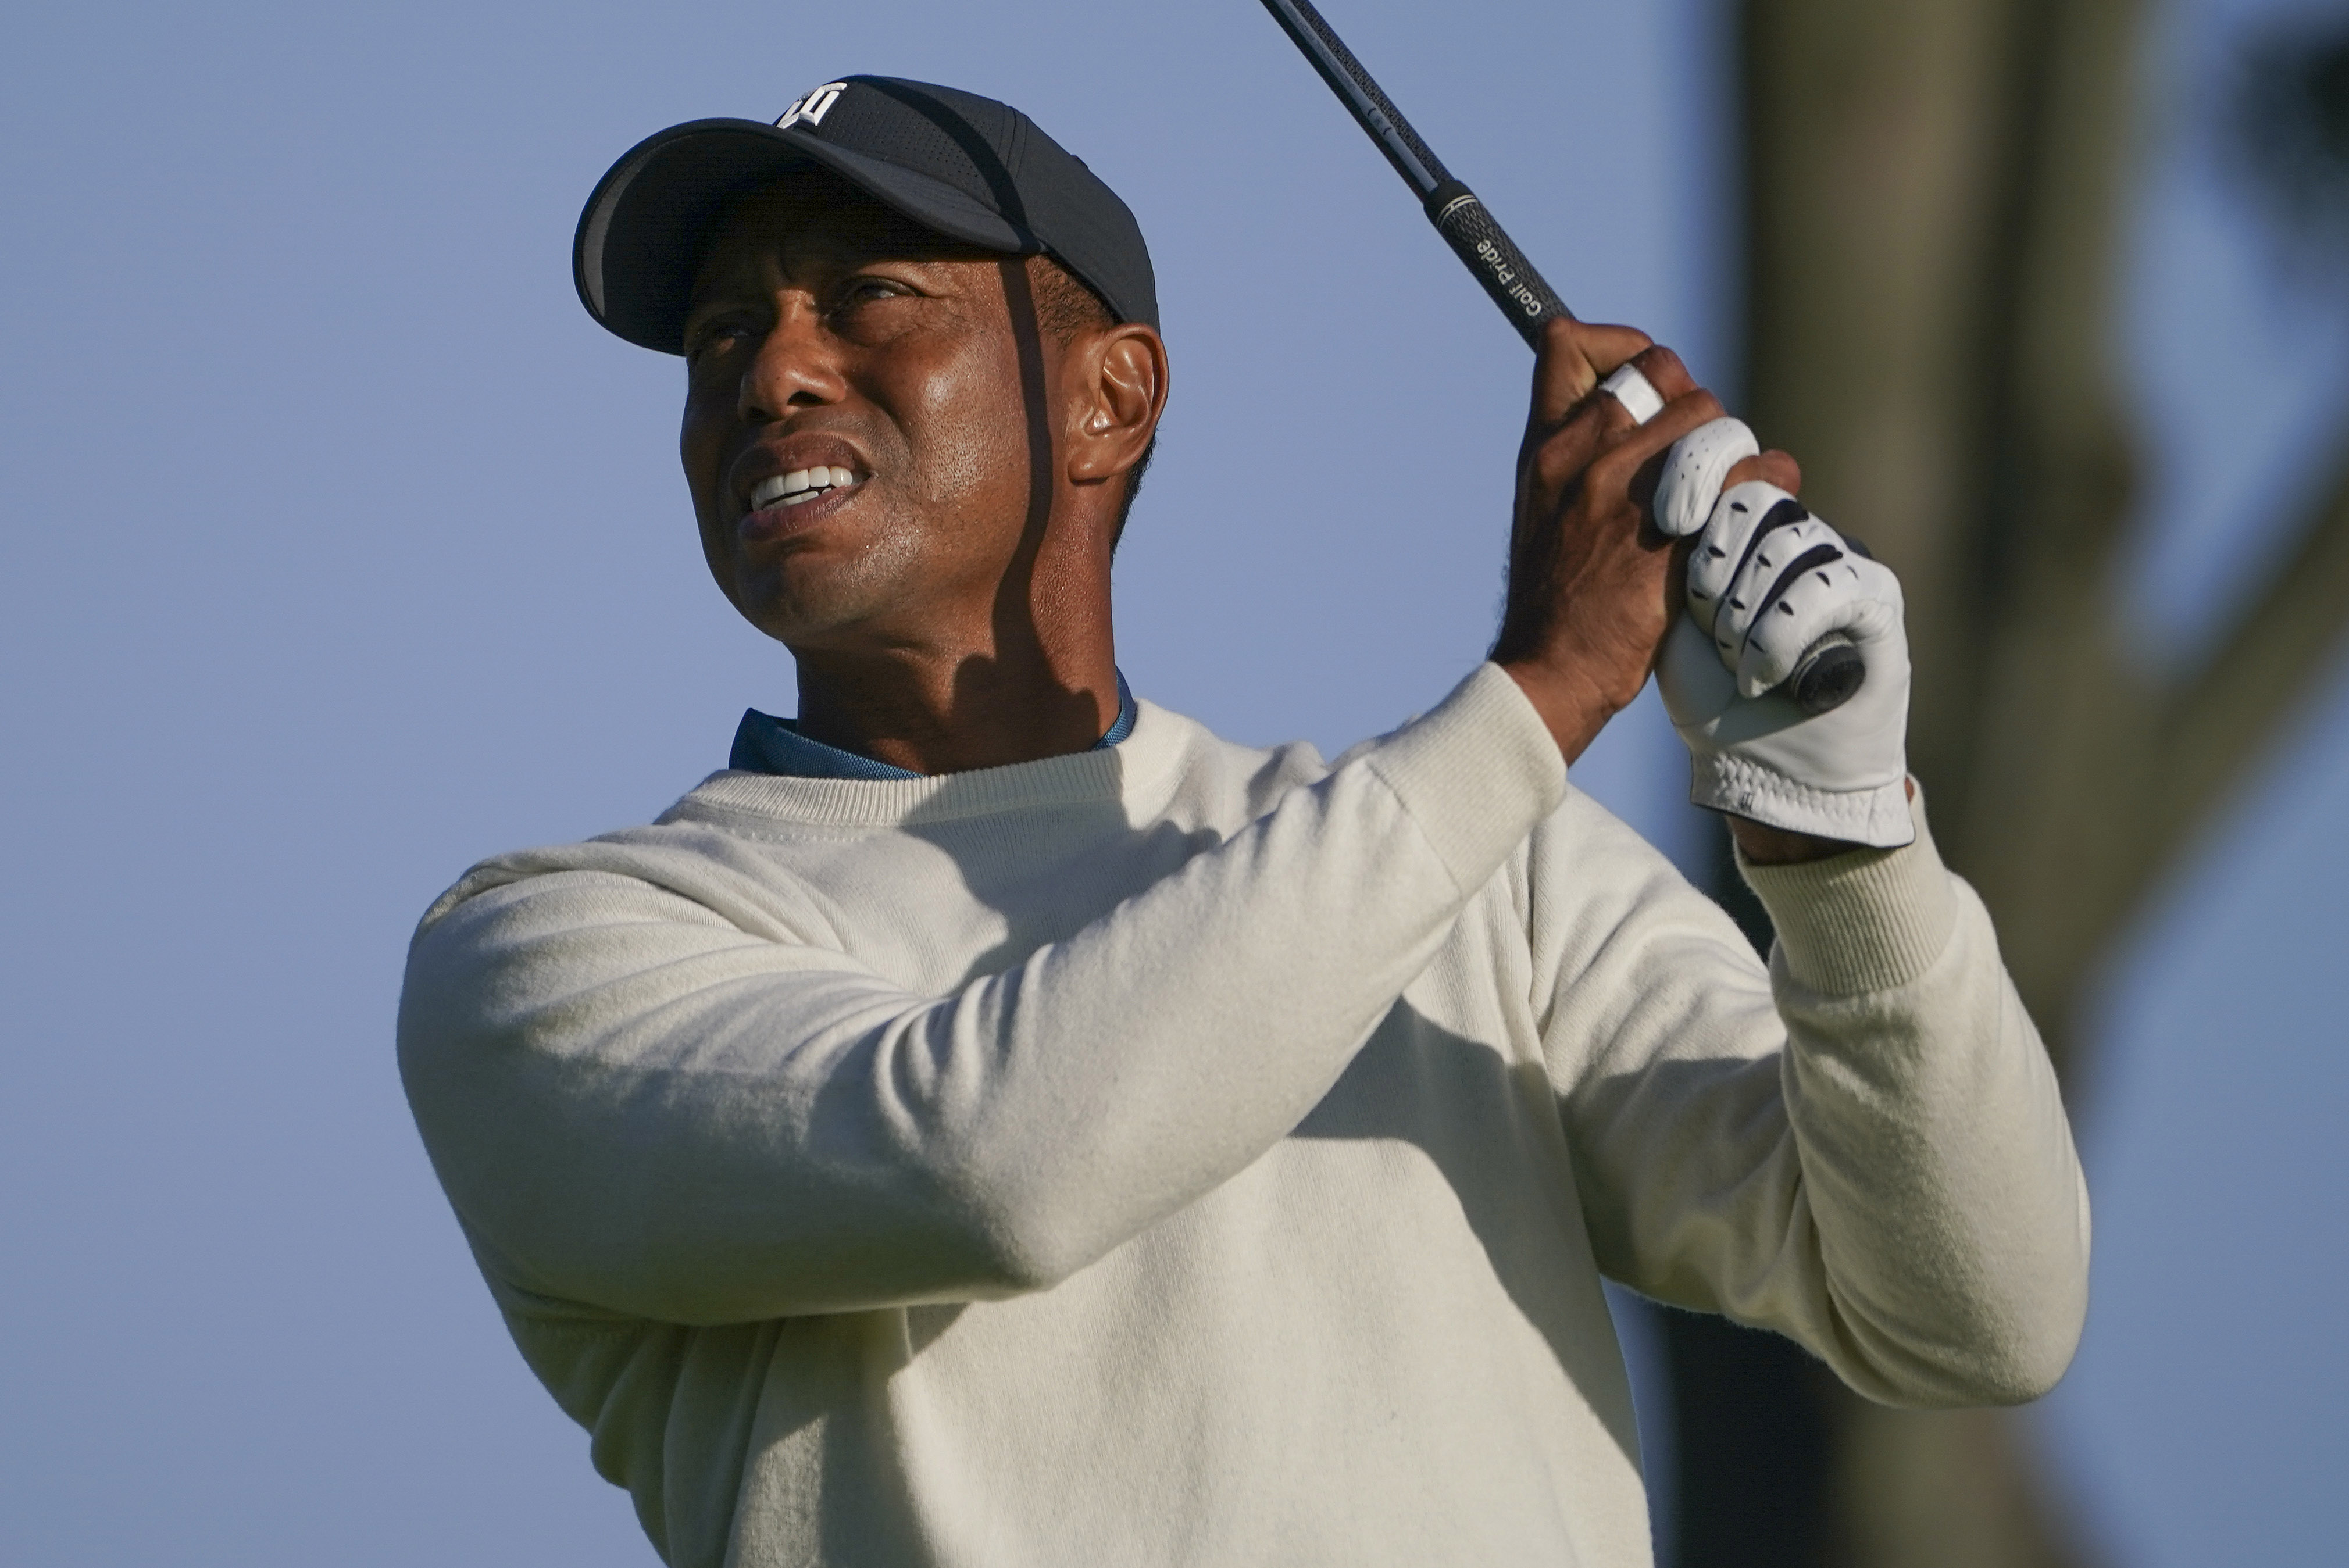 'I've gotten a lot stronger' ahead of PGA Championship: Tiger Woods